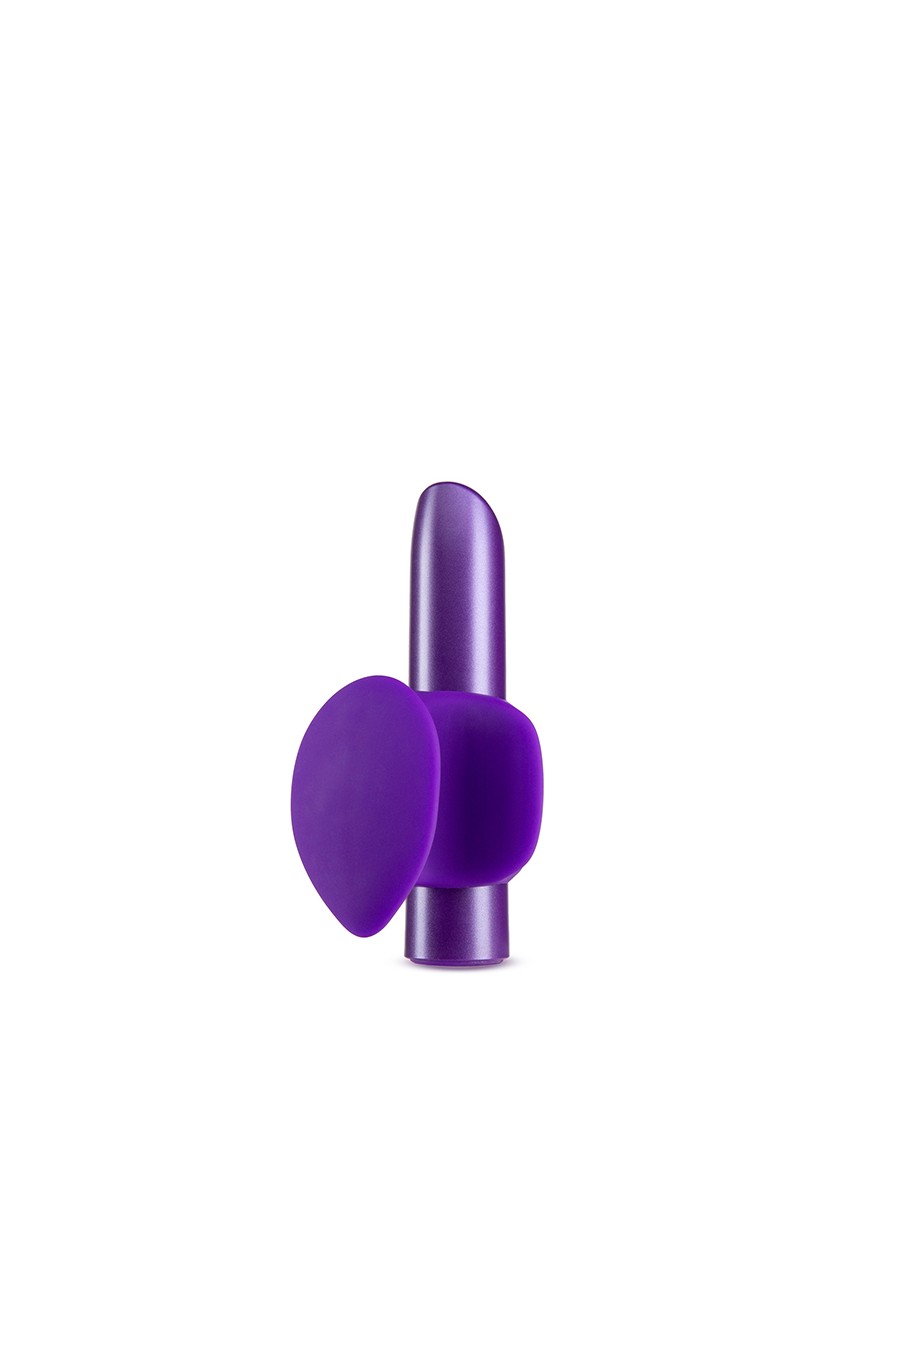 Wibrator pocisk Blush Noje B6 Iris Purple